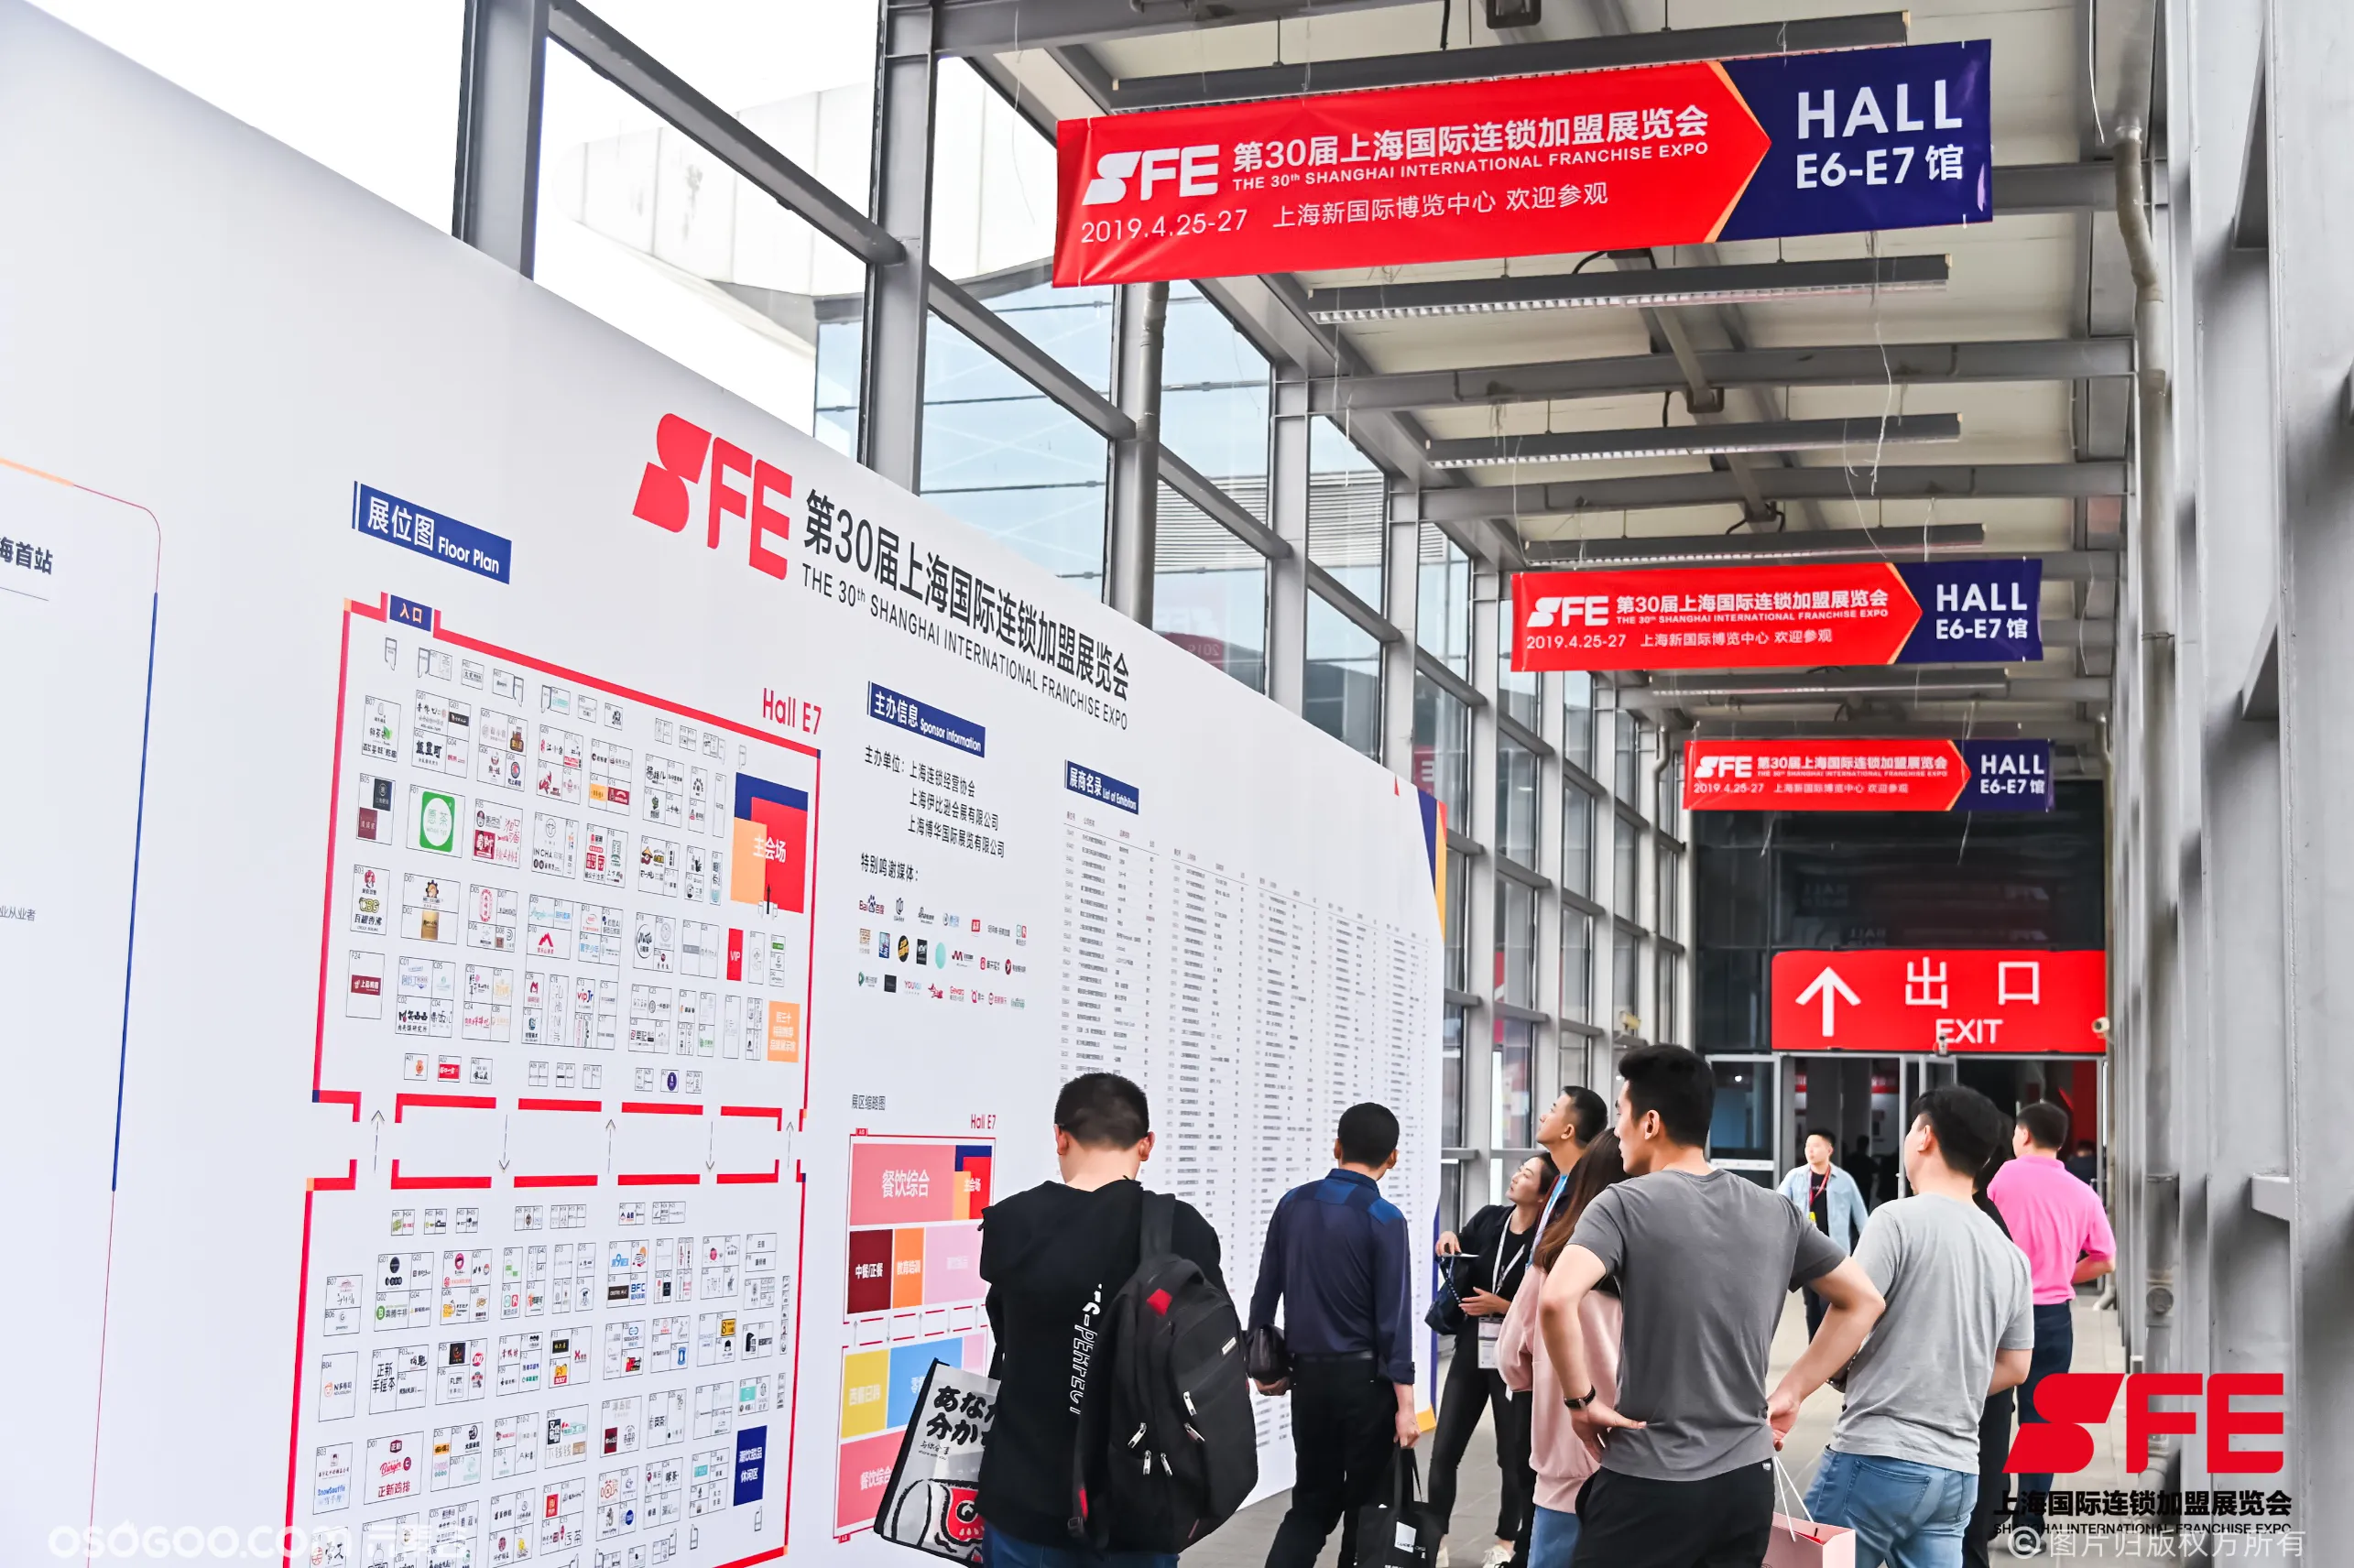 SFE第32届国际连锁加盟展上海新国际博览中心